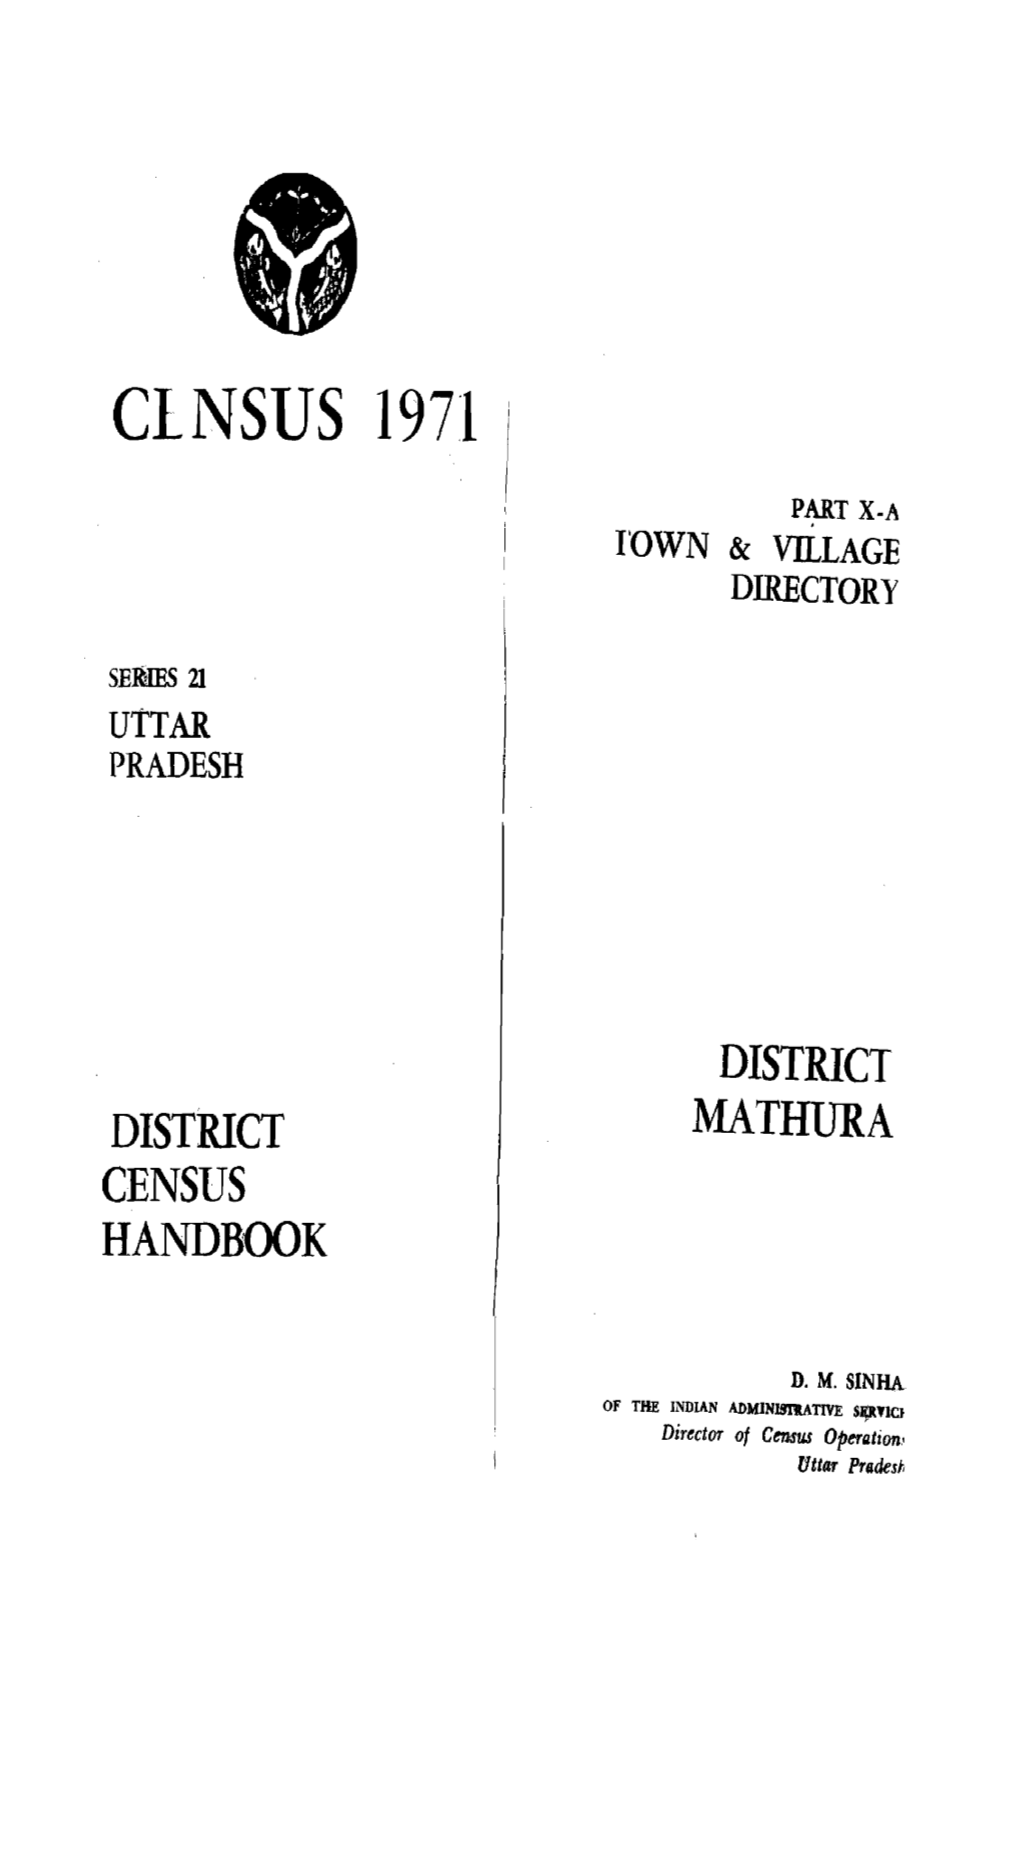 District Census Handbook, Mathura, Part X-A, Series-21, Uttar Pradesh